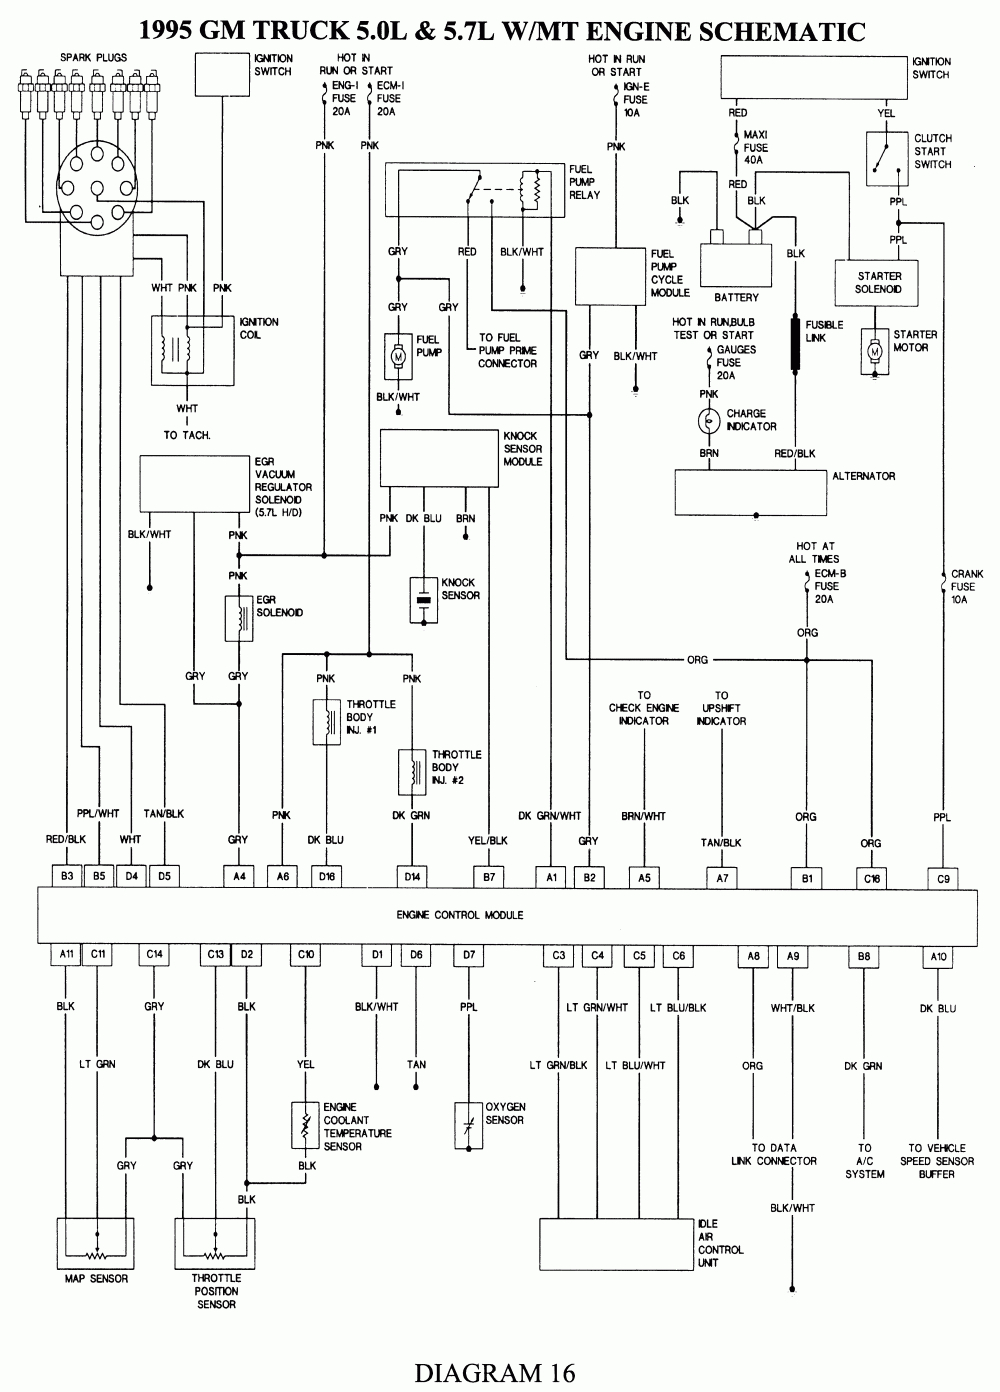 Repair Guides | Wiring Diagrams | Wiring Diagrams | Autozone - 1988 Chevy Truck Wiring Diagram